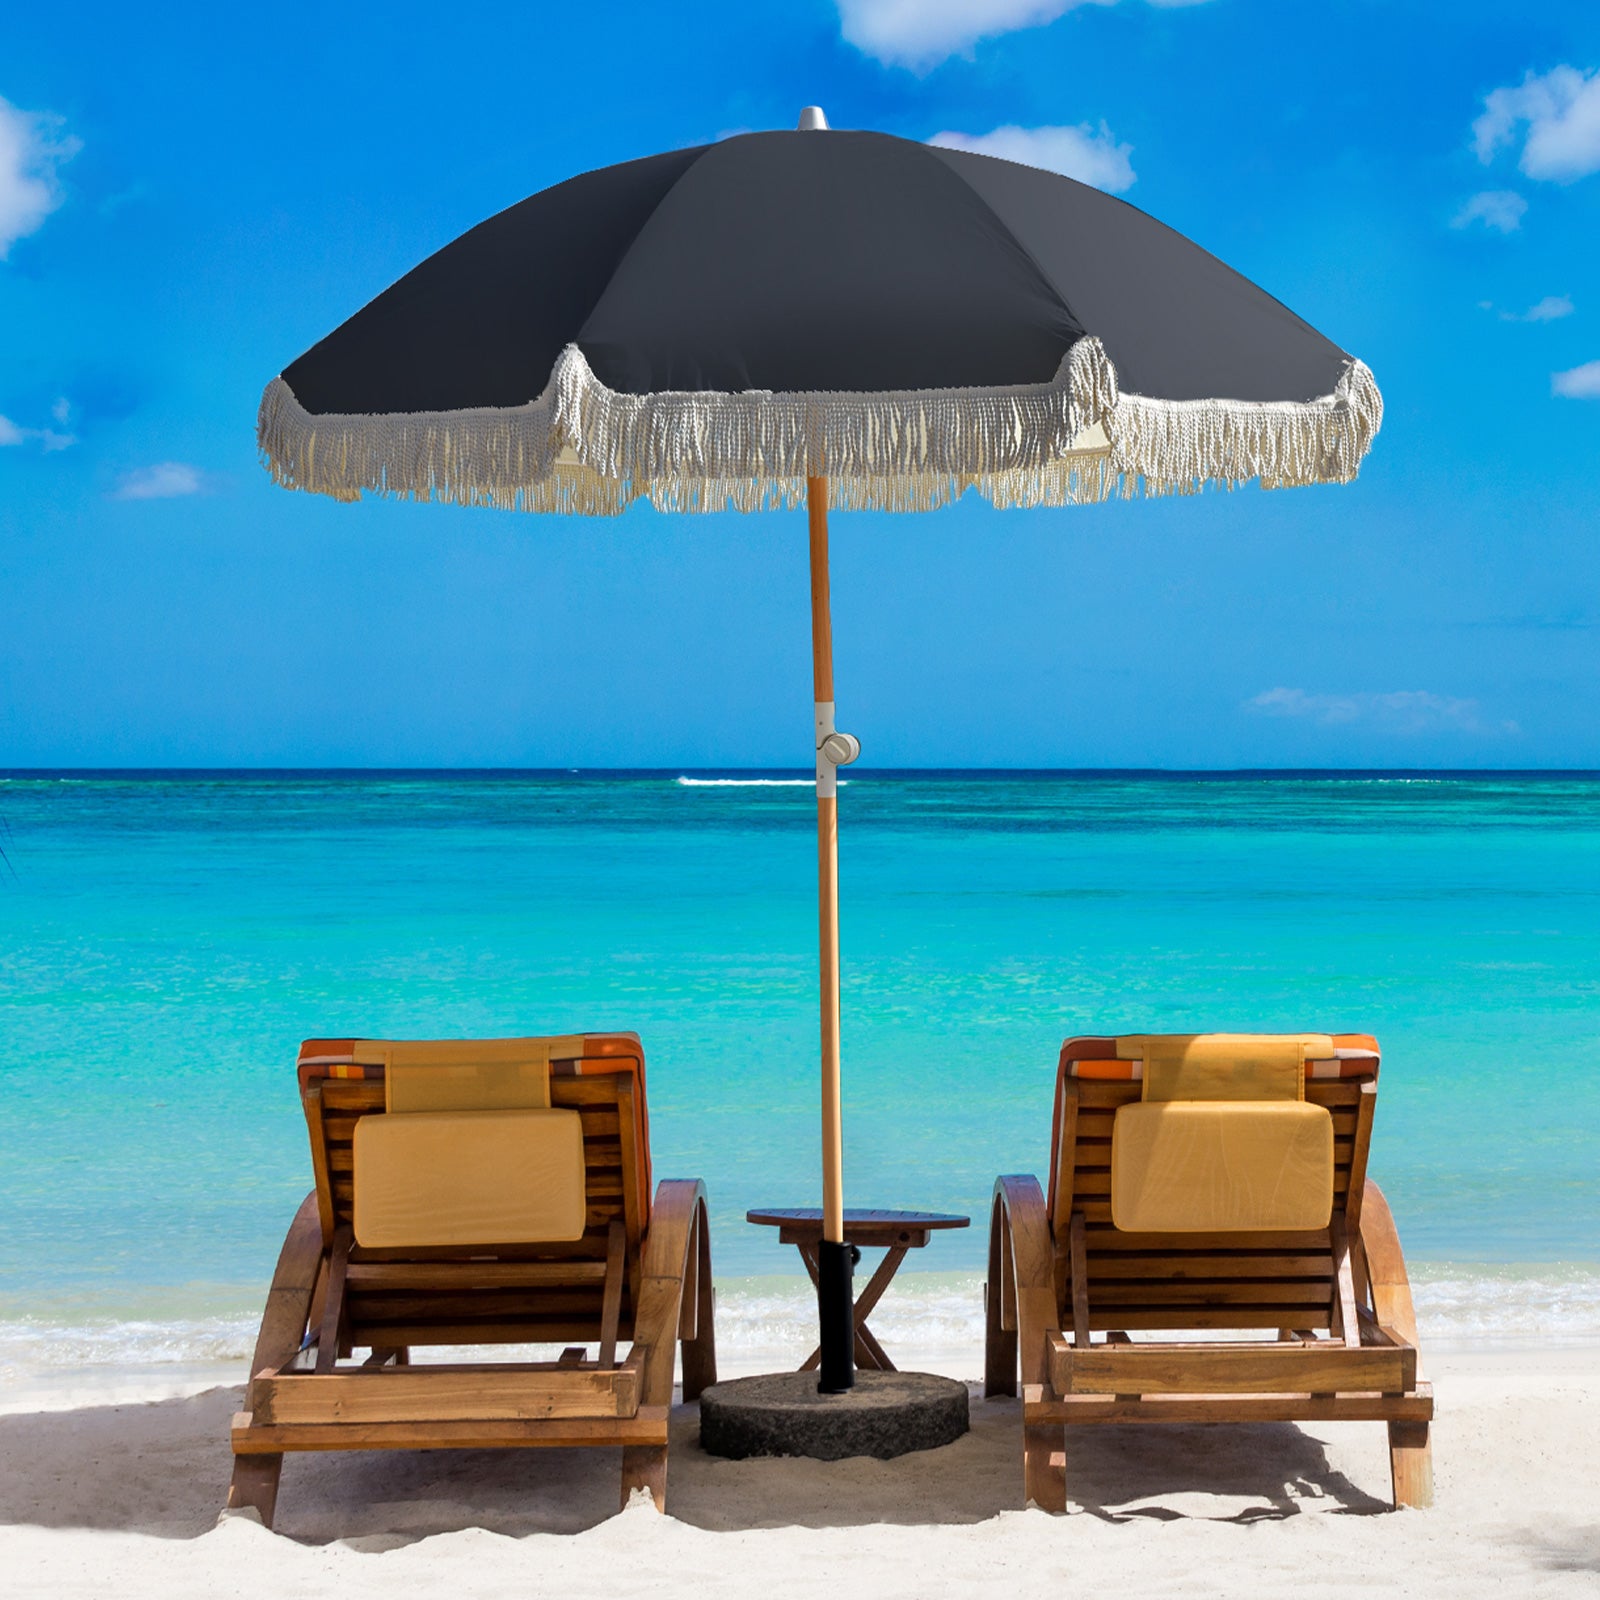 Havana Outdoors Beach Umbrella Portable 2 Metre Fringed Garden Sun Shade Shelter - Black - SILBERSHELL